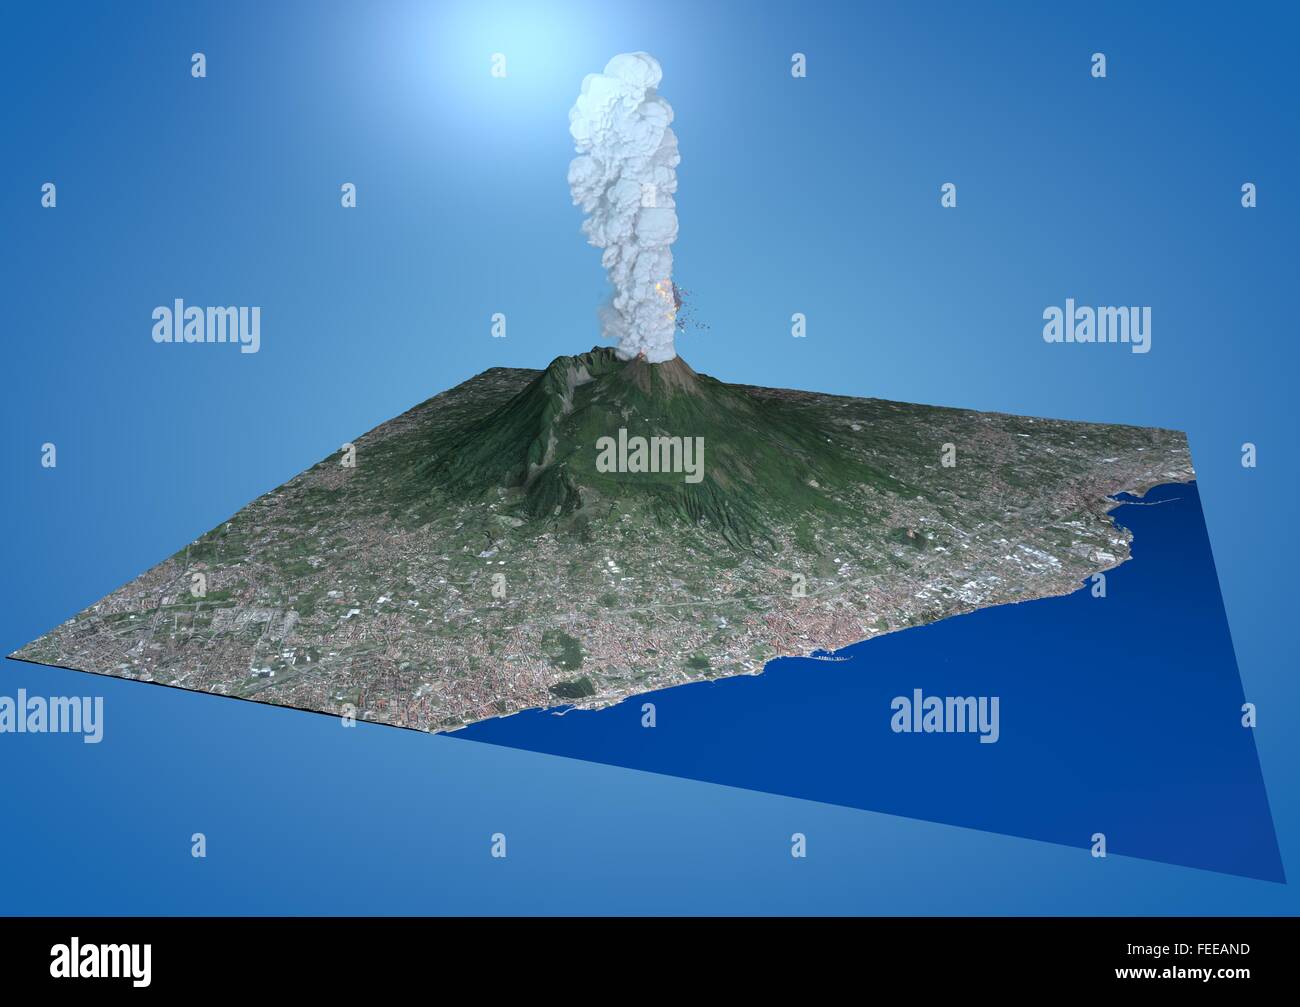 Satellite view of the volcano Vesuvius, eruption, 3d, Italy Campania Stock Photo